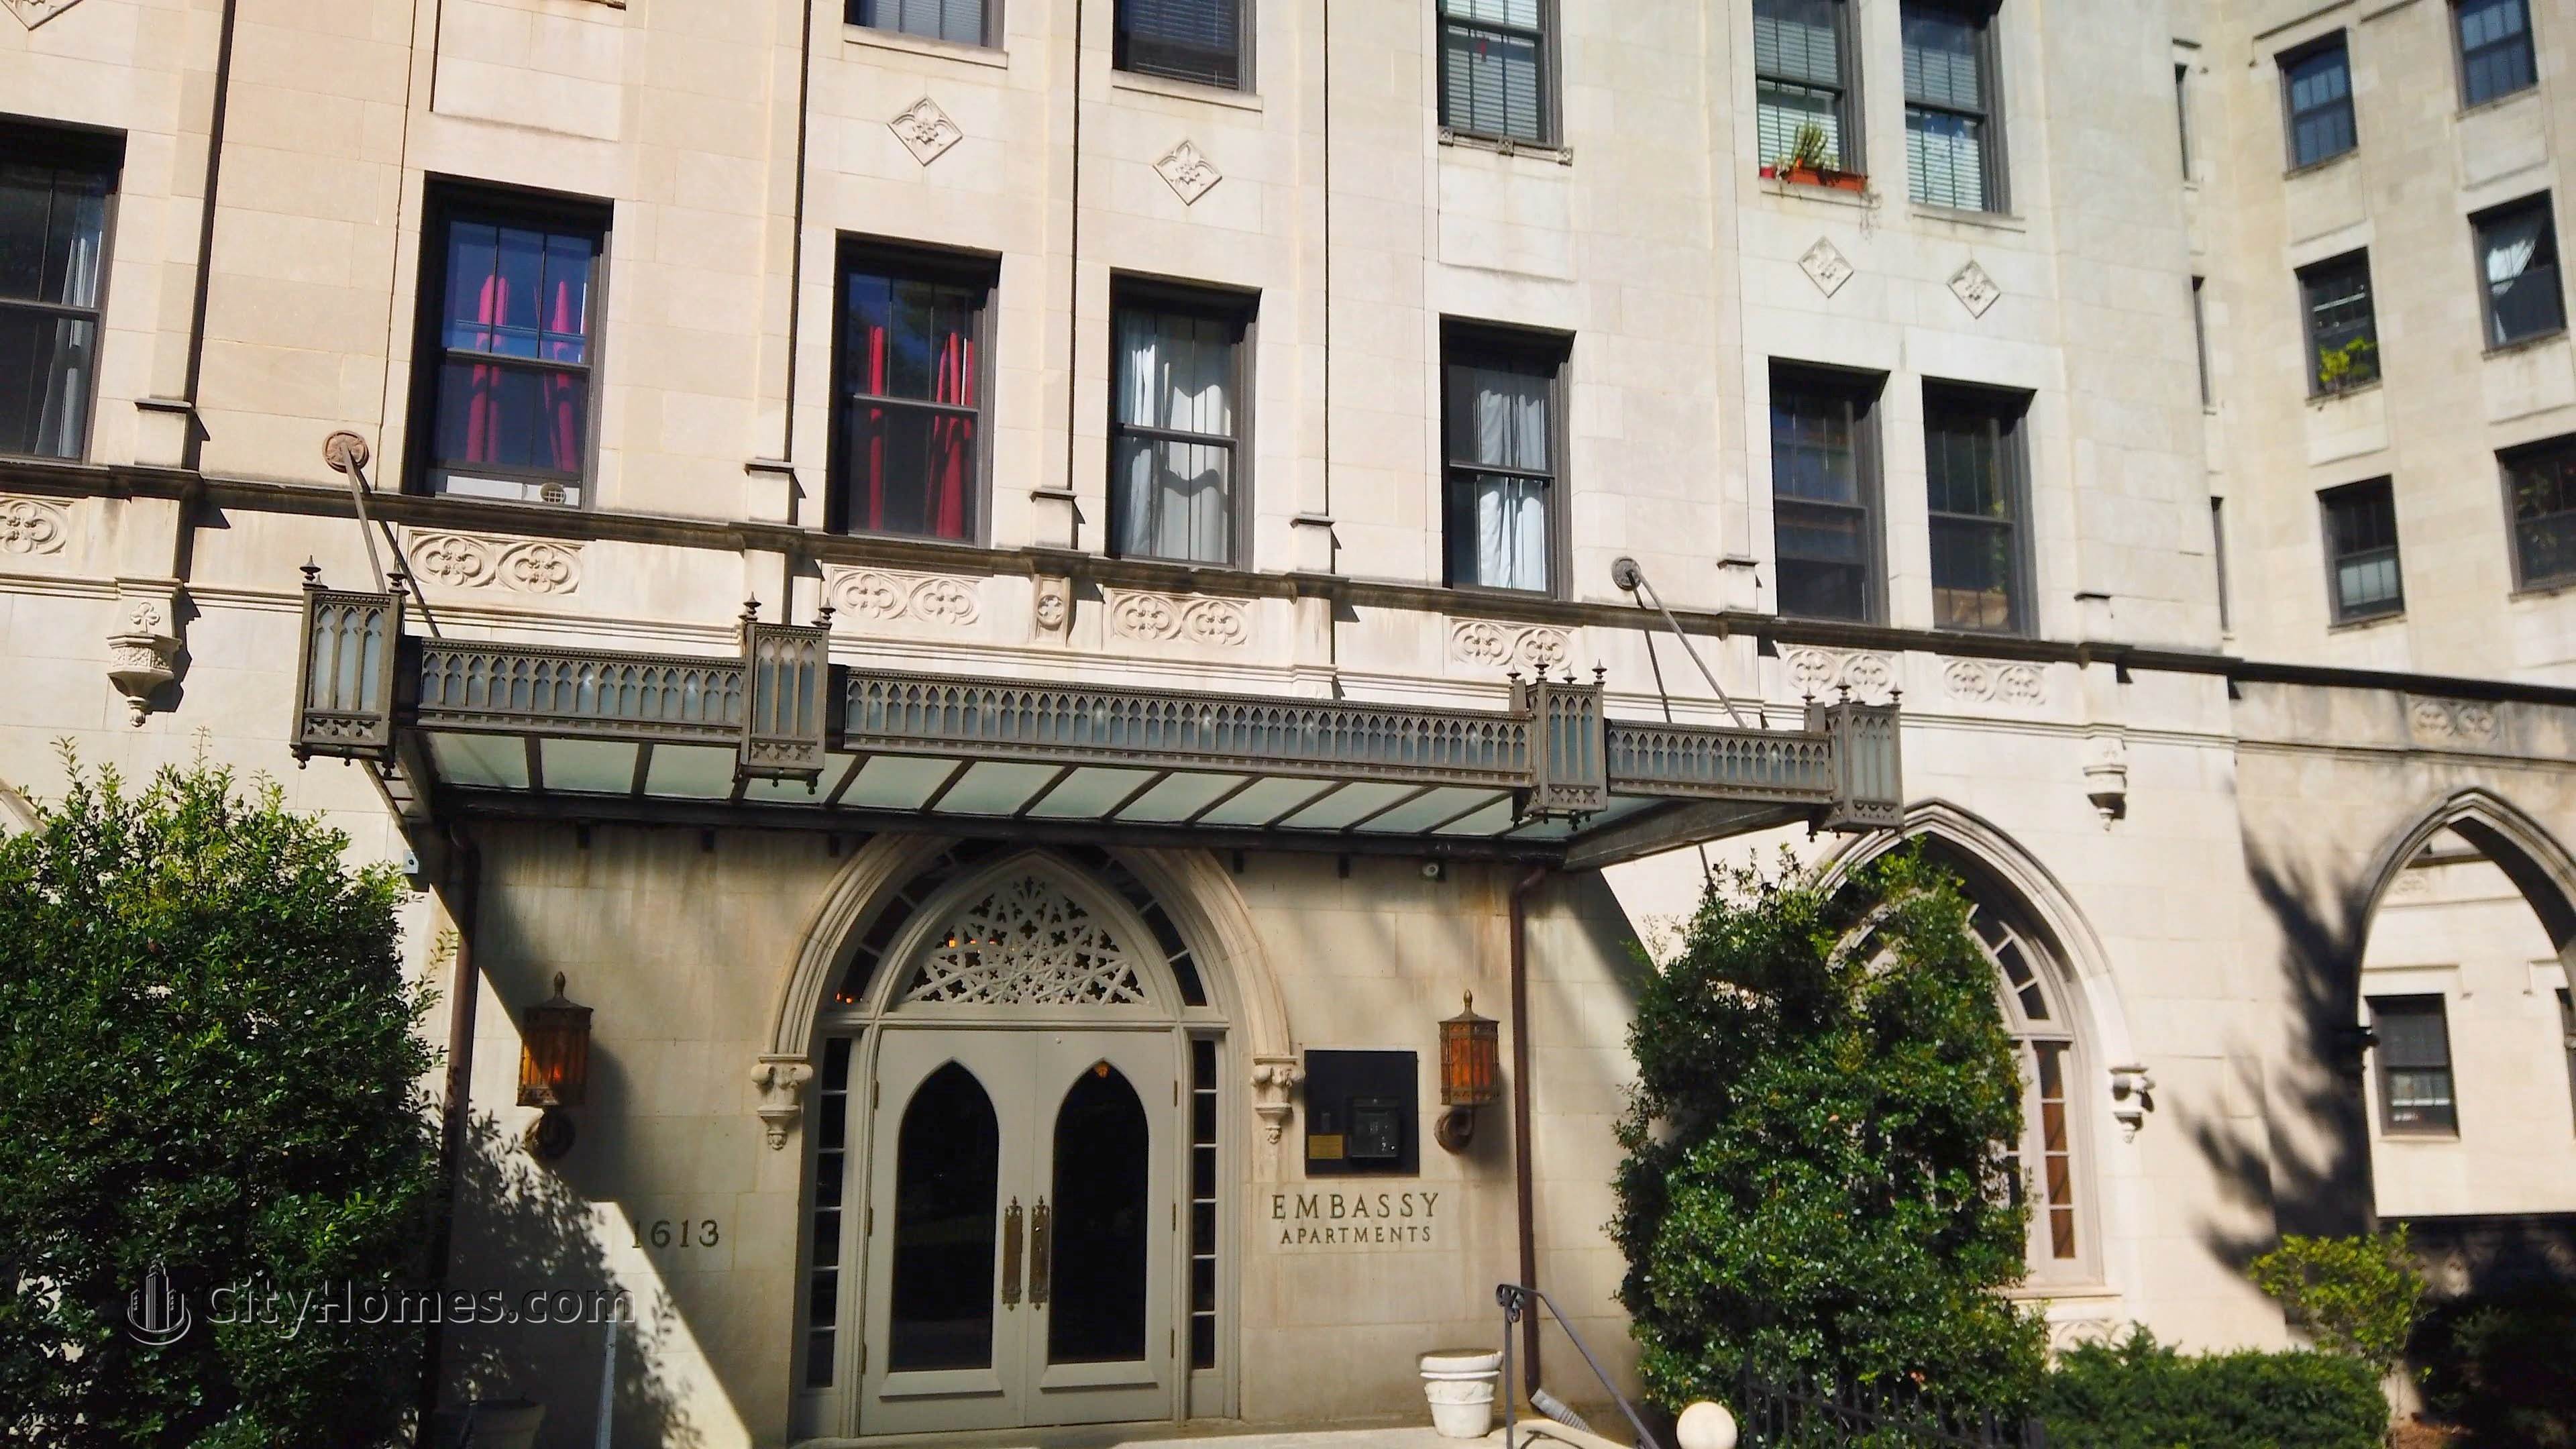 The Embassy edificio en 1613 Harvard St NW, Mount Pleasant, Washington, DC 20009